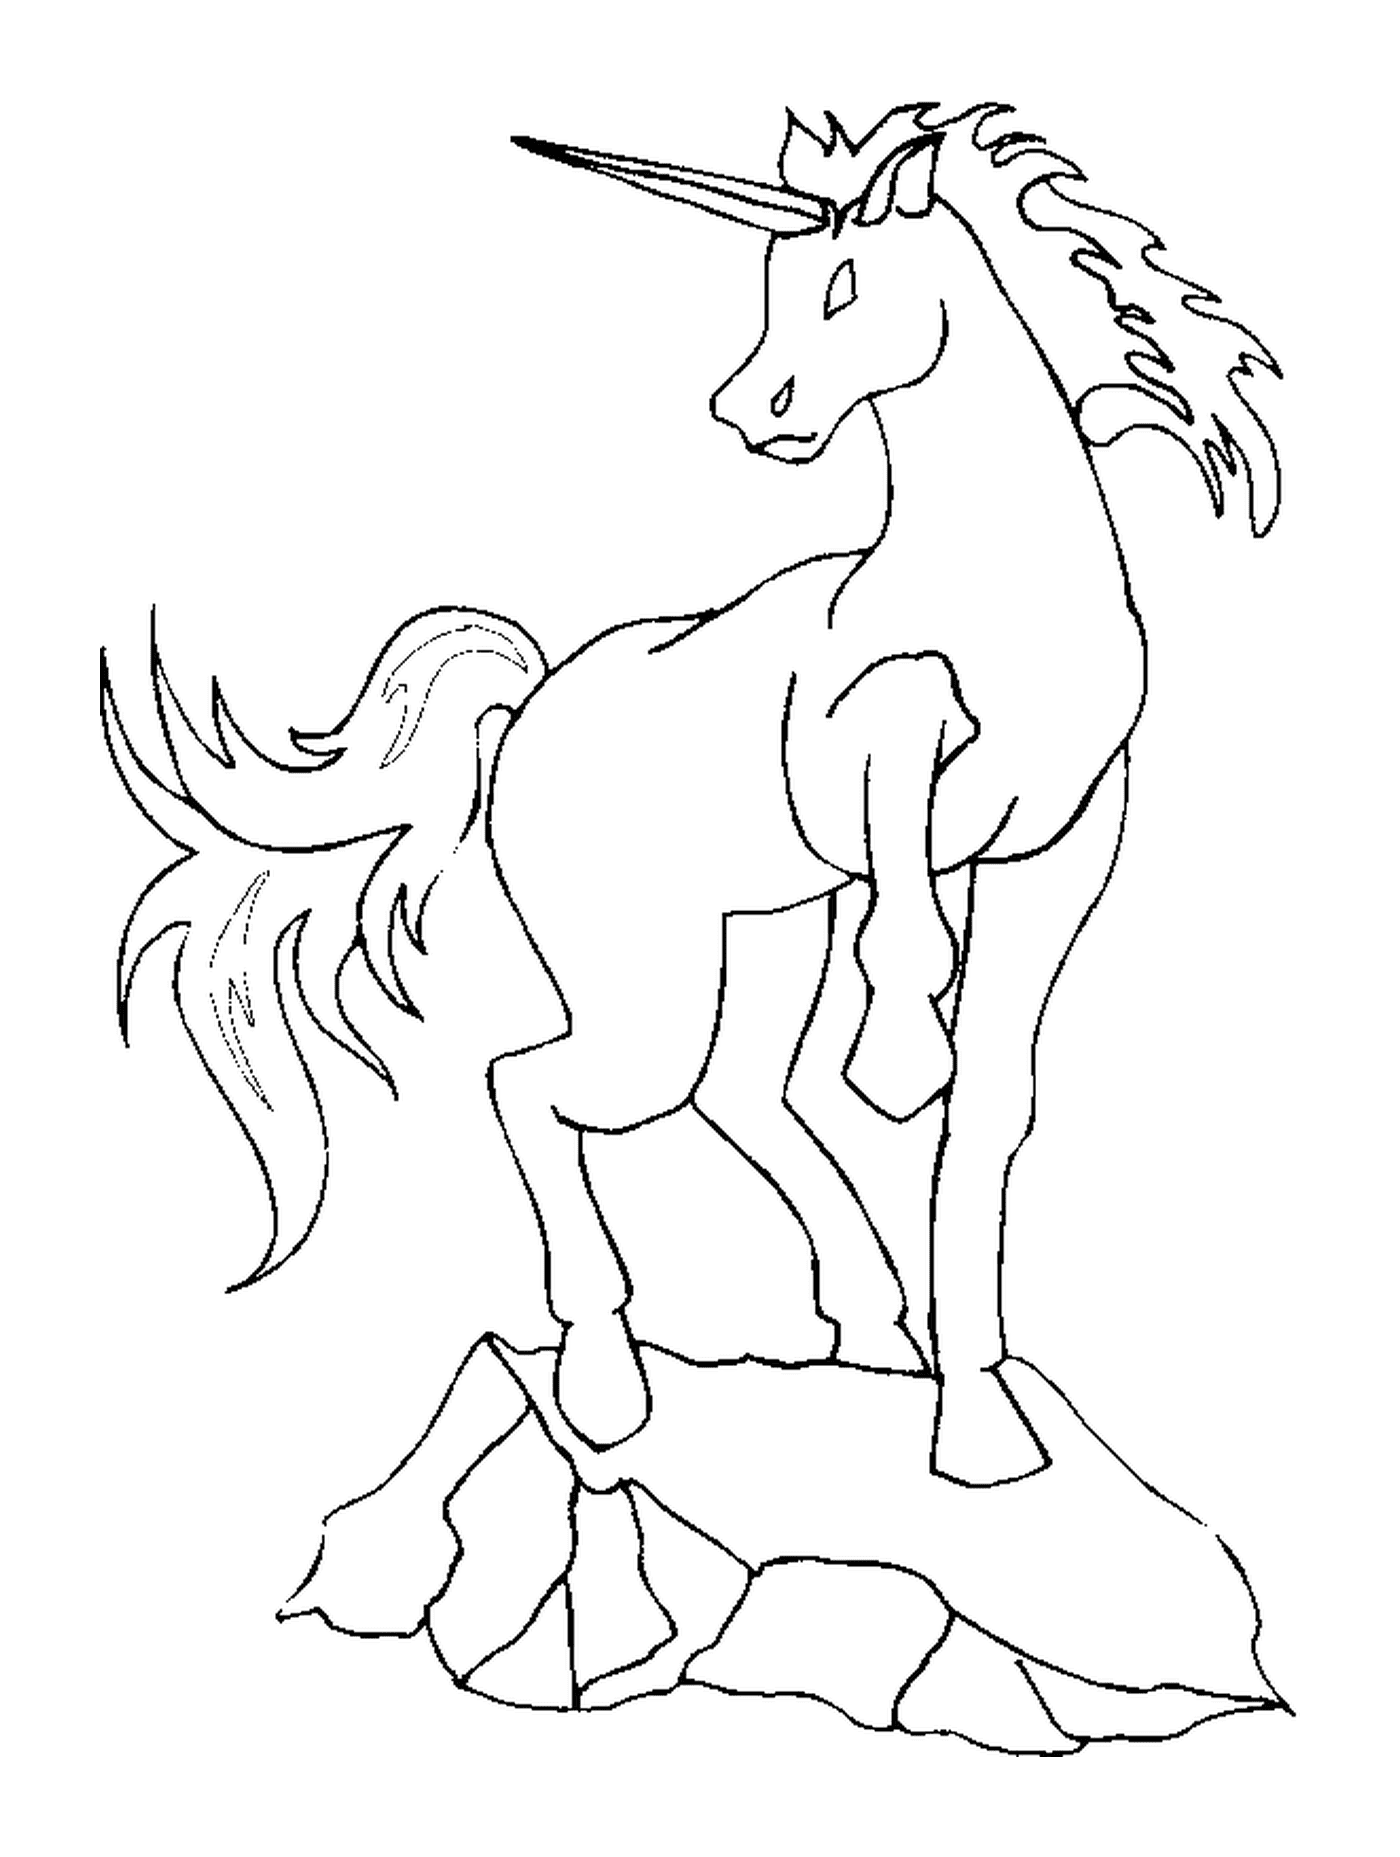  unicorn on a rock, not horse 